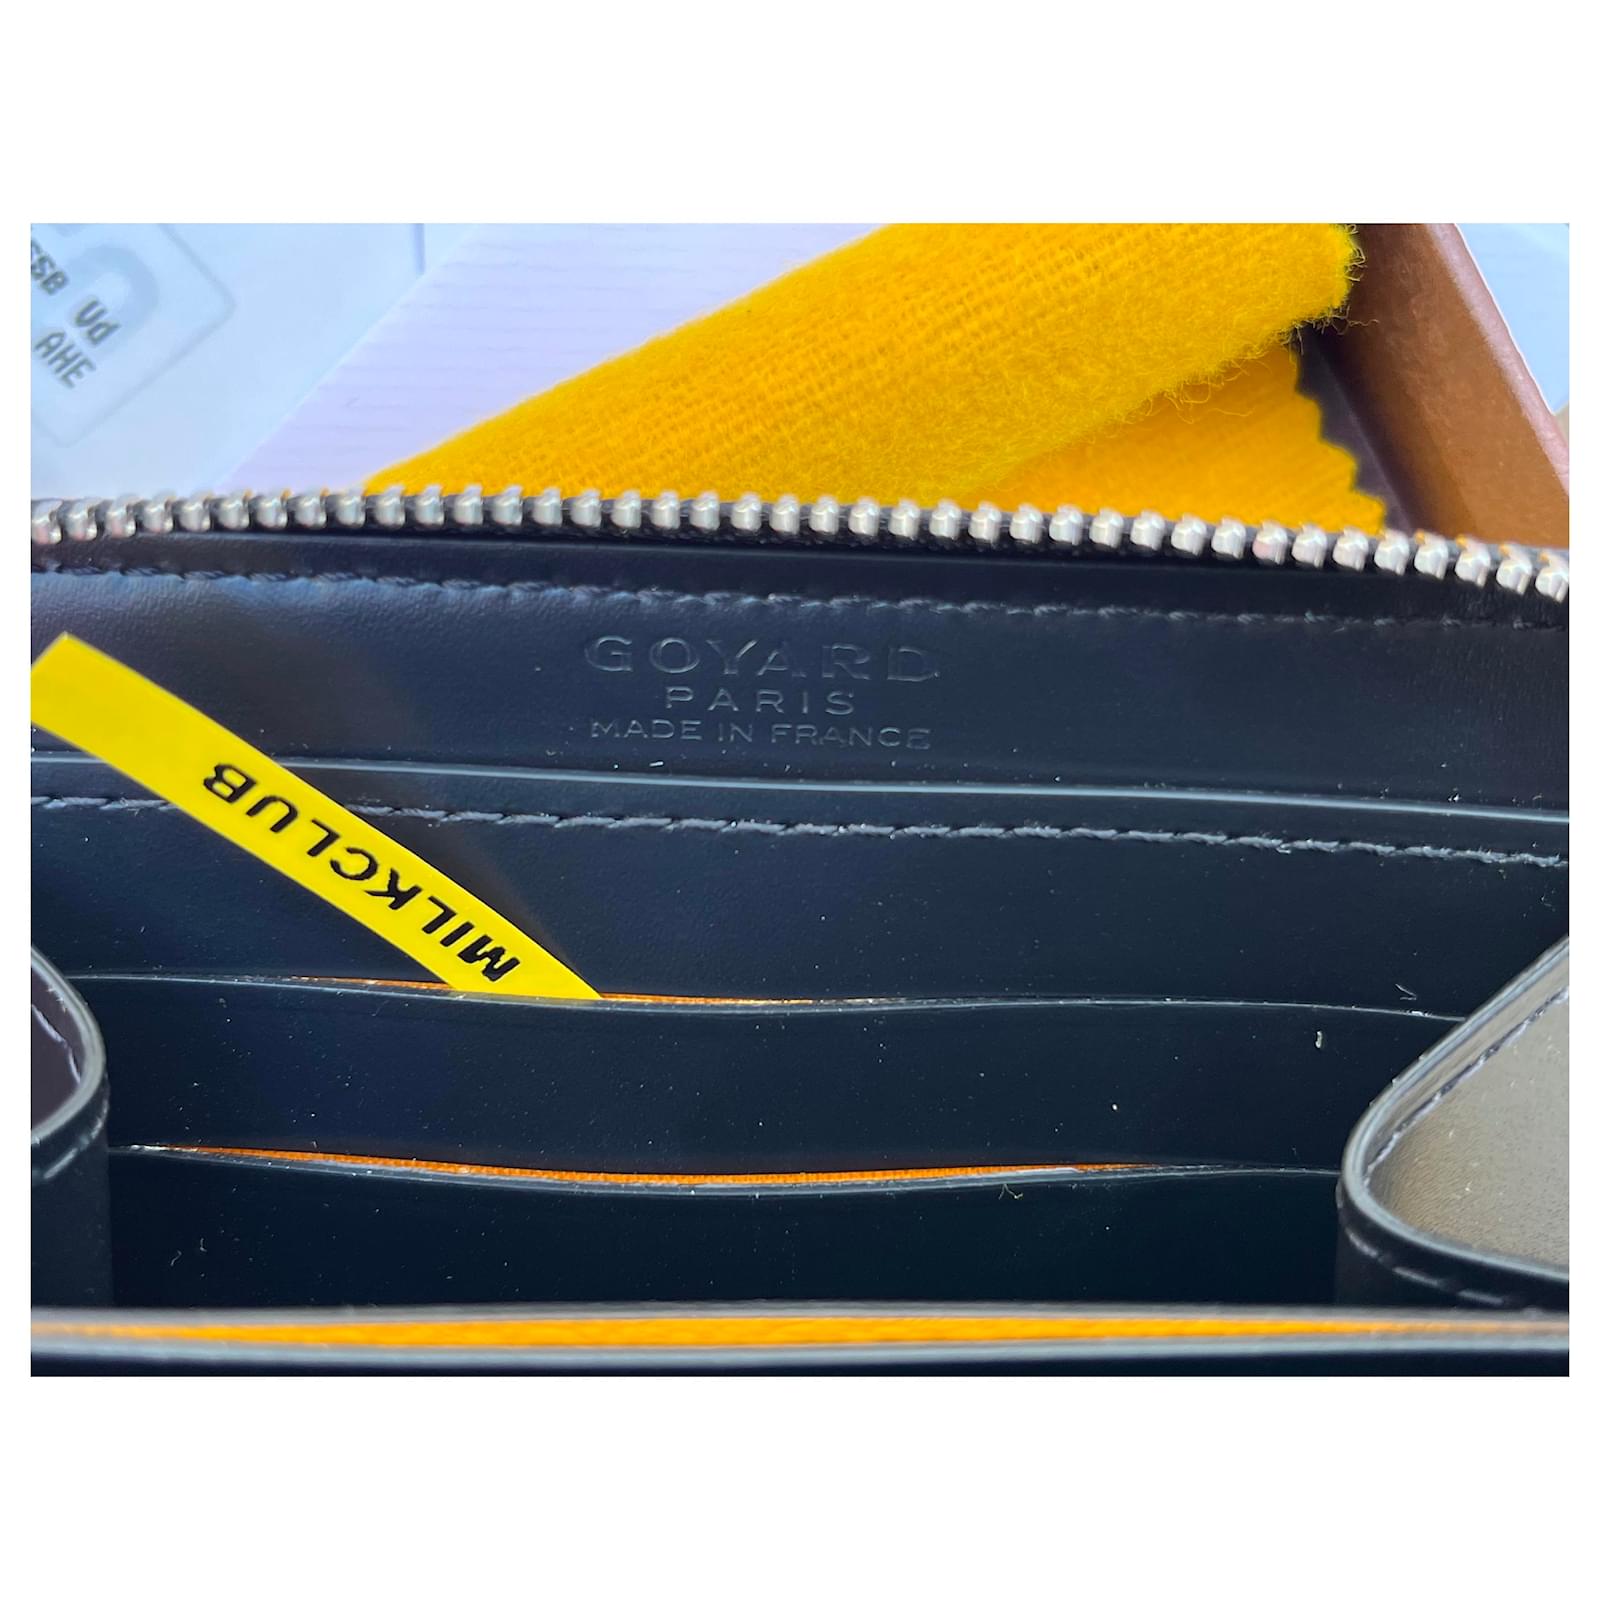 Top Quality Goyar-d Matignon PM Wallet Black 1:1 Repfrom Suplook